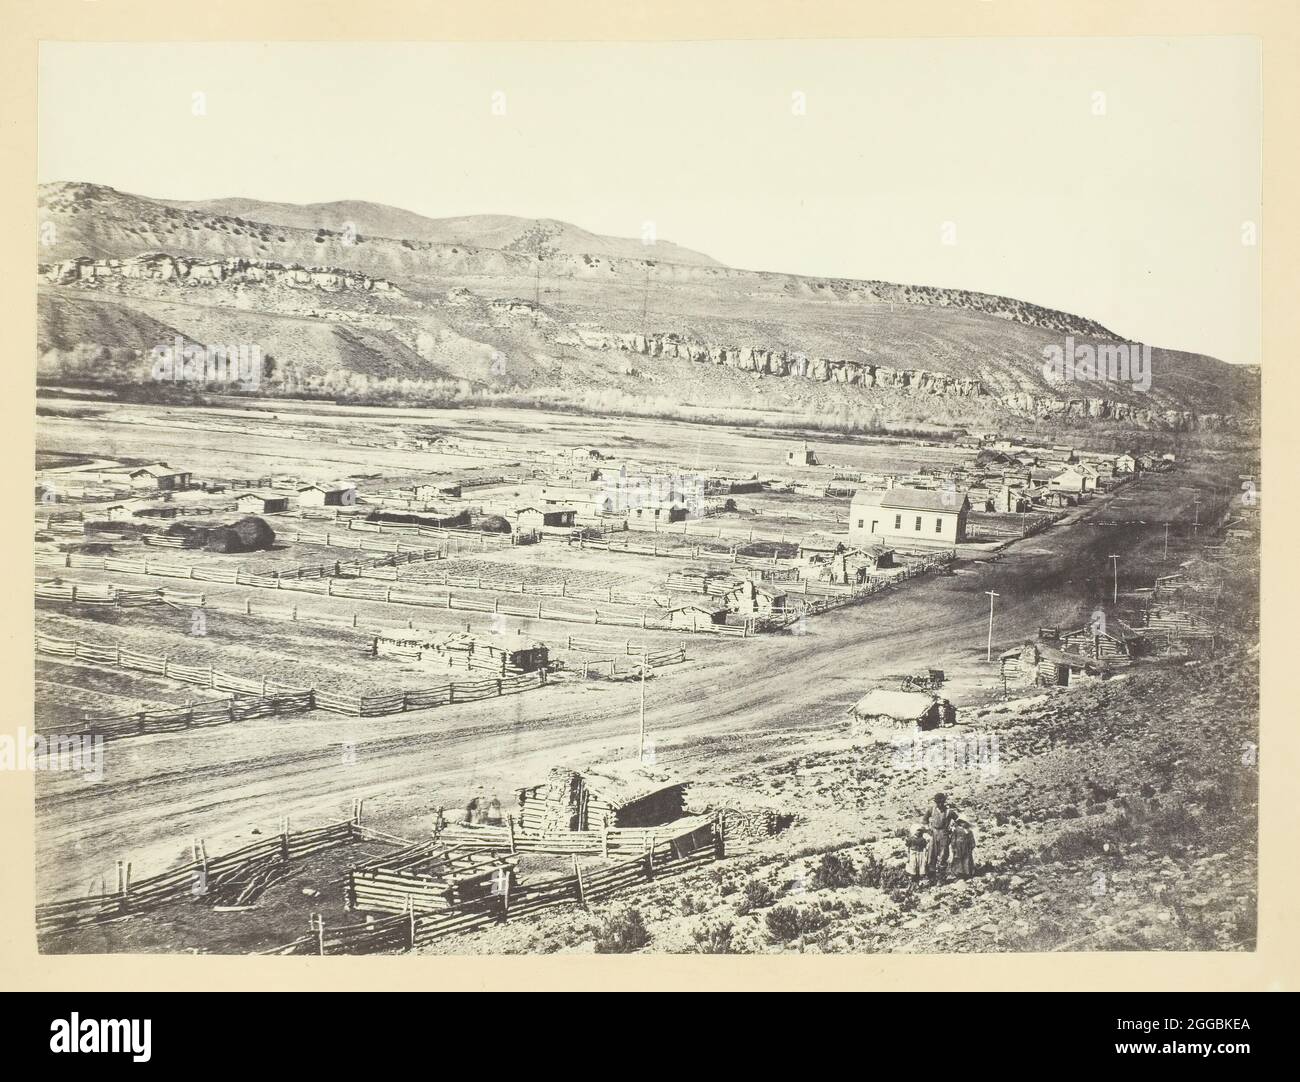 Coalville, Weber Valley, Utah, 1868/69. Albumen print, pl. xviii dall'album "Sun Pictures of Rocky Mountain Scenografie" (1870). Foto Stock